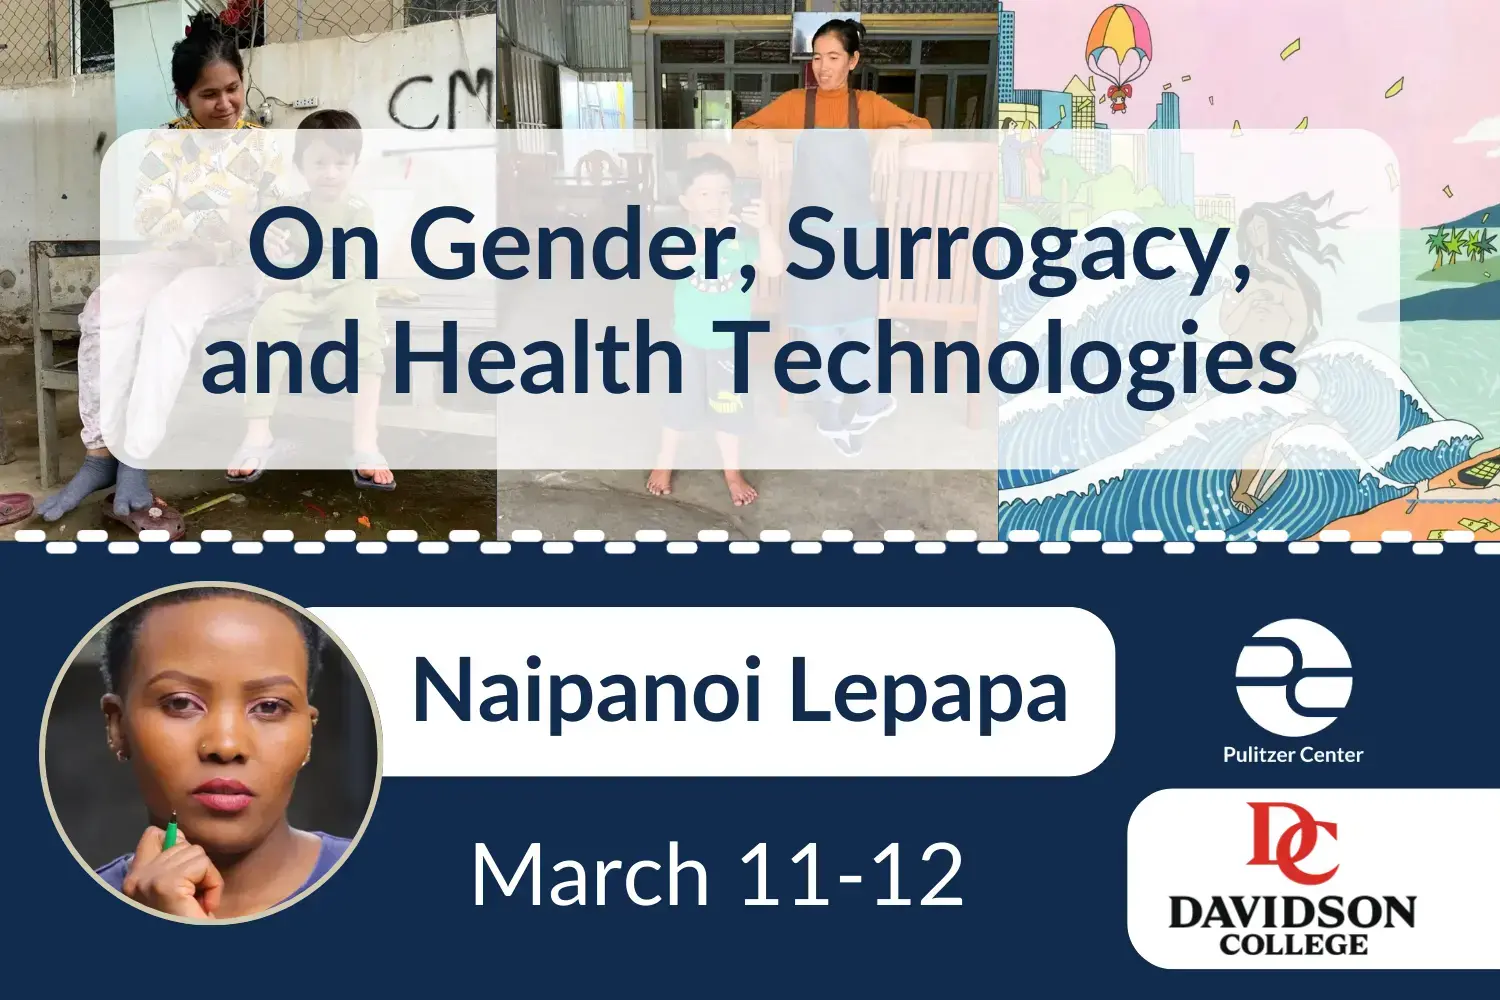 On Gender, Surrogacy, and Health Technologies: Naipanoi Lepapa at Davidson College